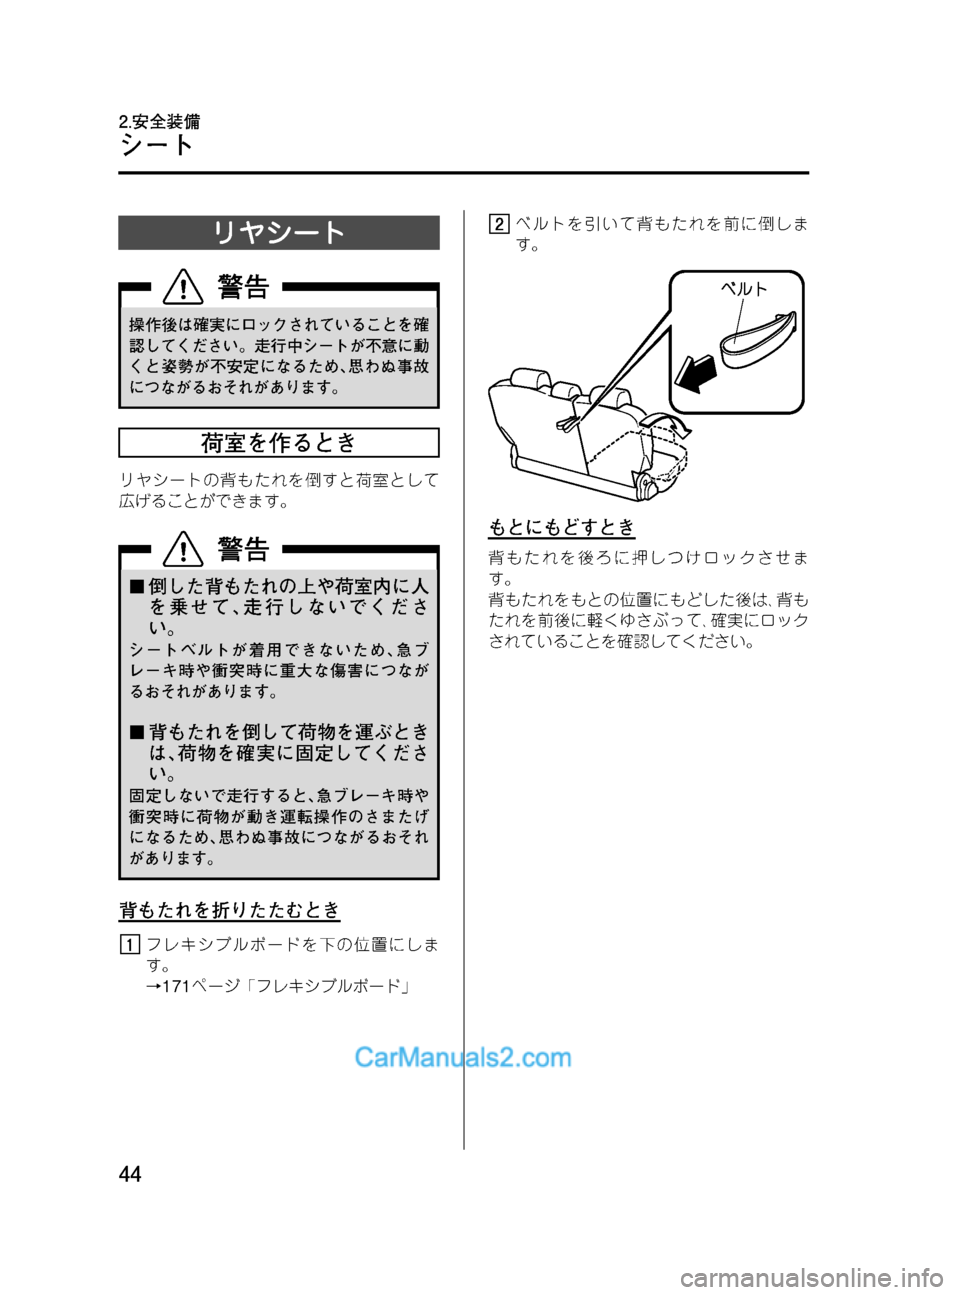 MAZDA MODEL VERISA 2007  ベリーサ｜取扱説明書 (in Japanese) Black plate (44,1)
リヤシート
操作後は確実にロックされていることを確
認してください。走行中シートが不意に動
くと姿勢が不安定になるため､思わ�